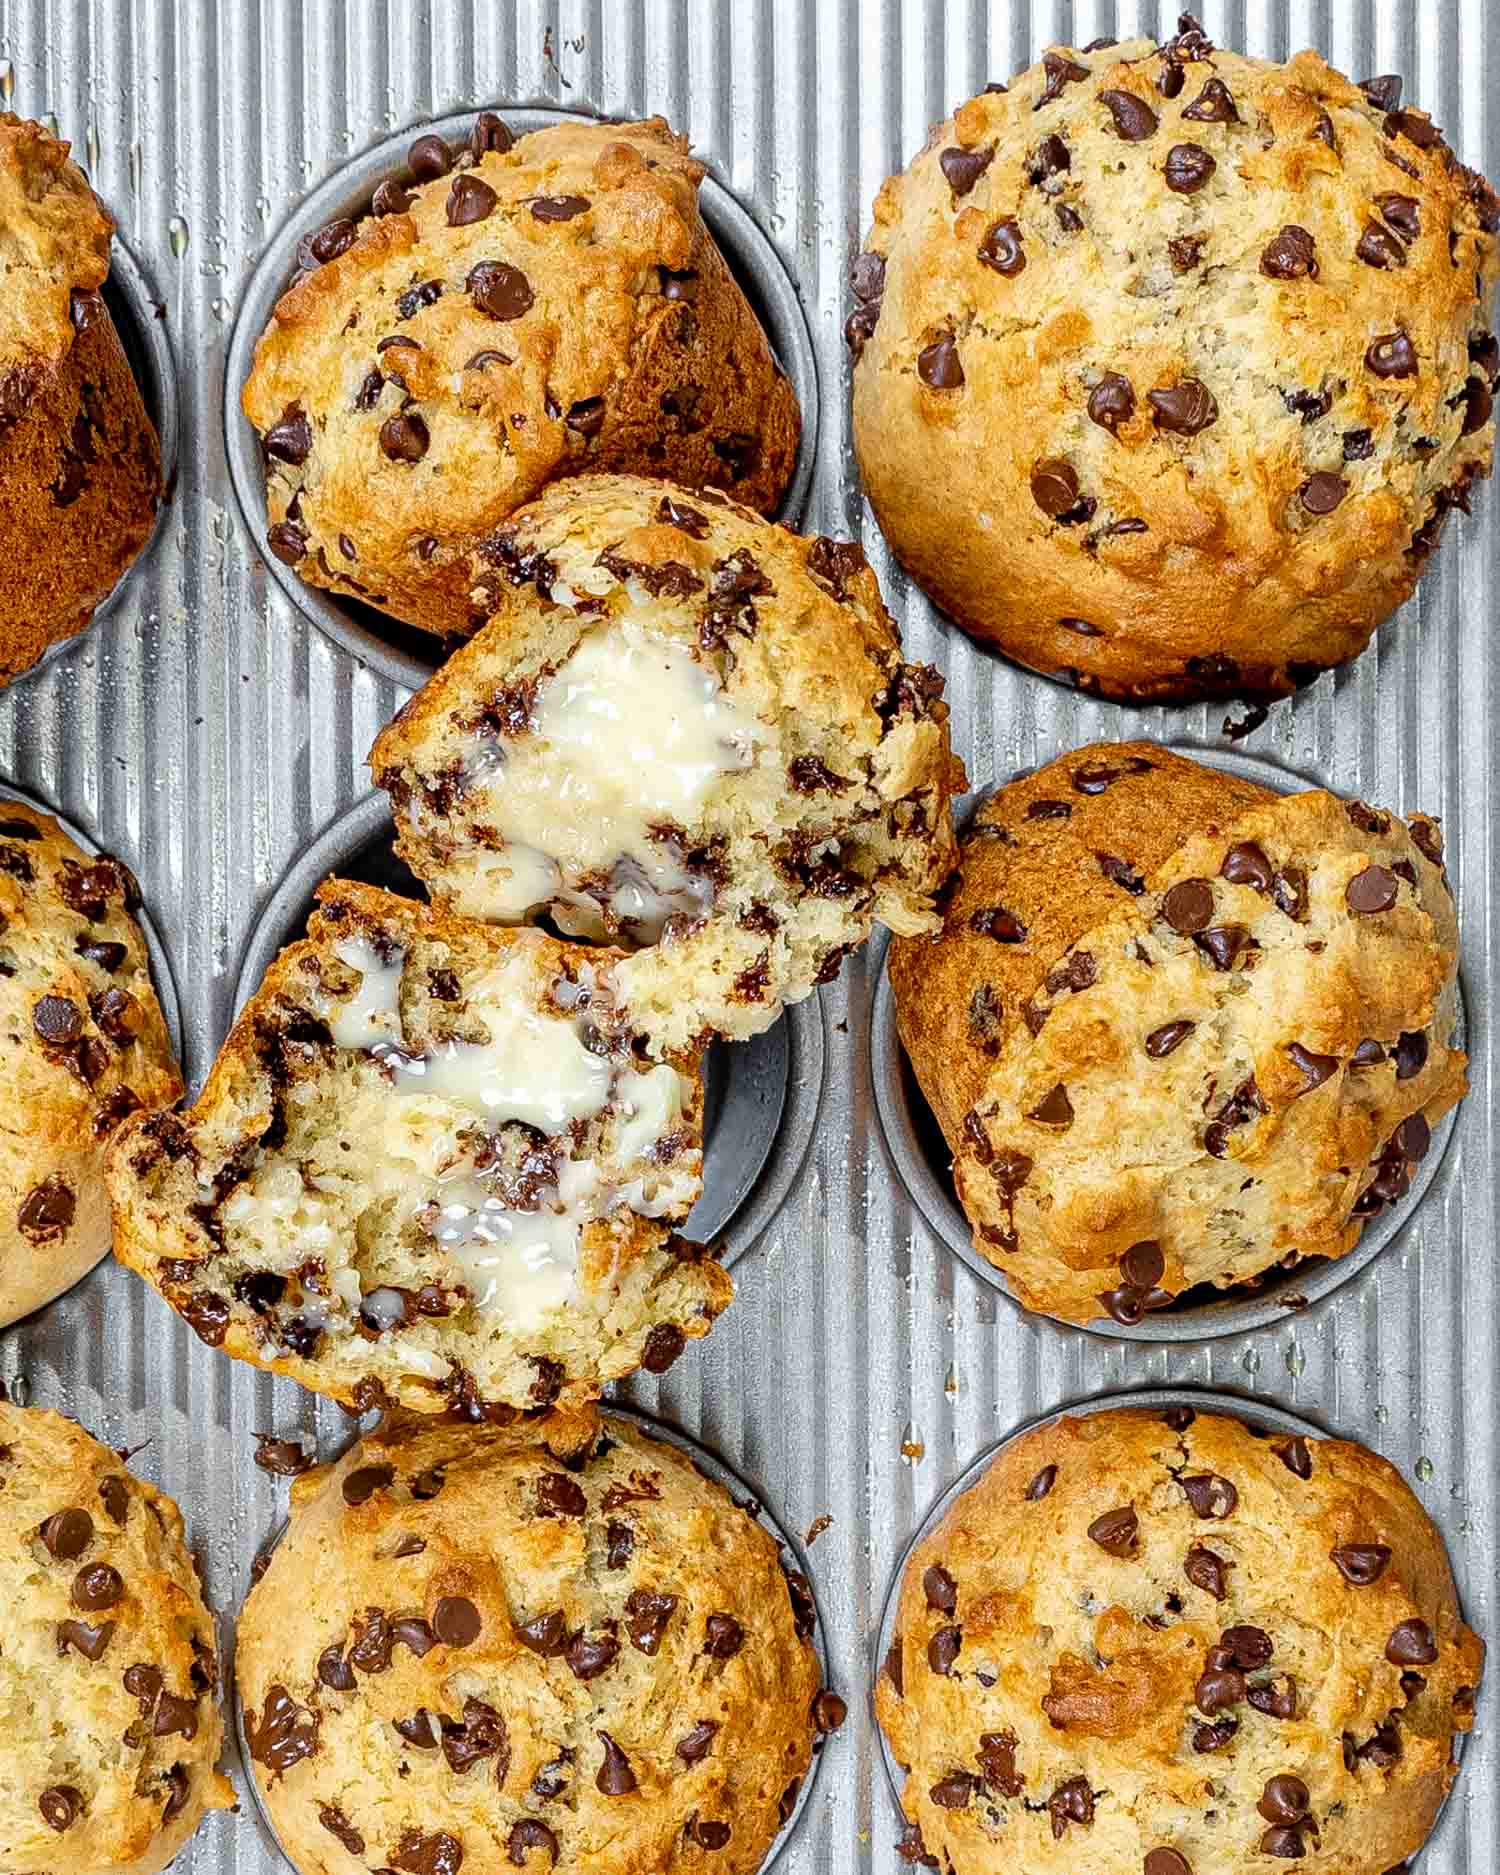 https://www.jocooks.com/wp-content/uploads/2020/02/chocolate-chip-muffins-1-9.jpg